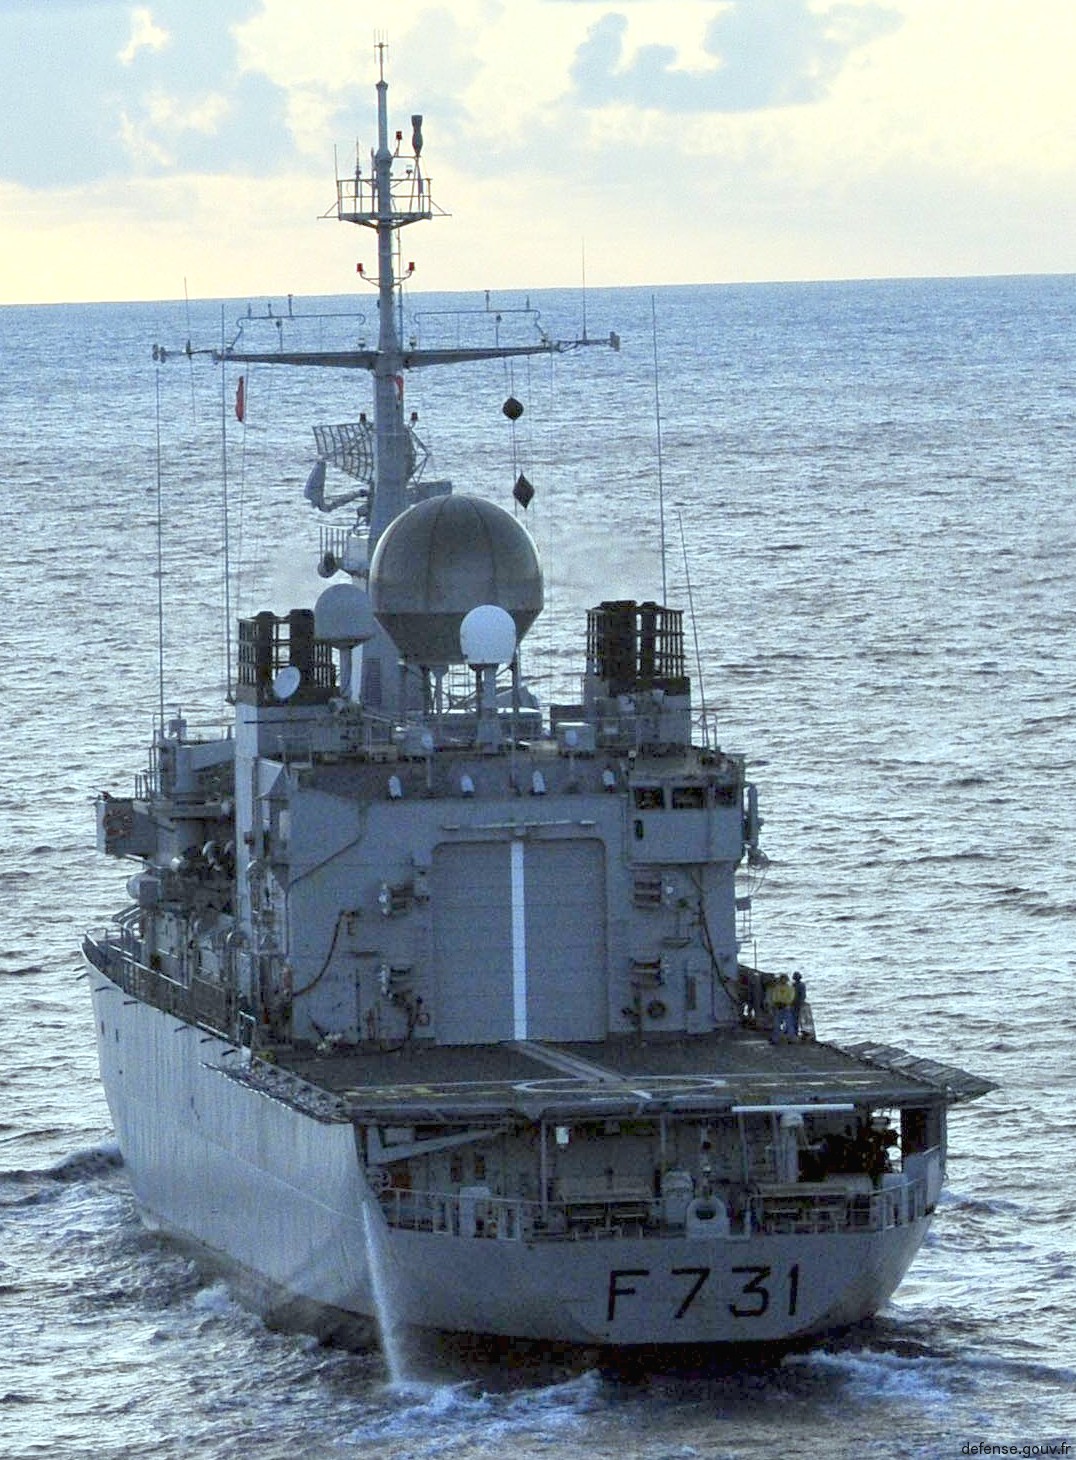 f-731 fs prairial floreal class frigate french navy marine nationale fregate surveillance 54